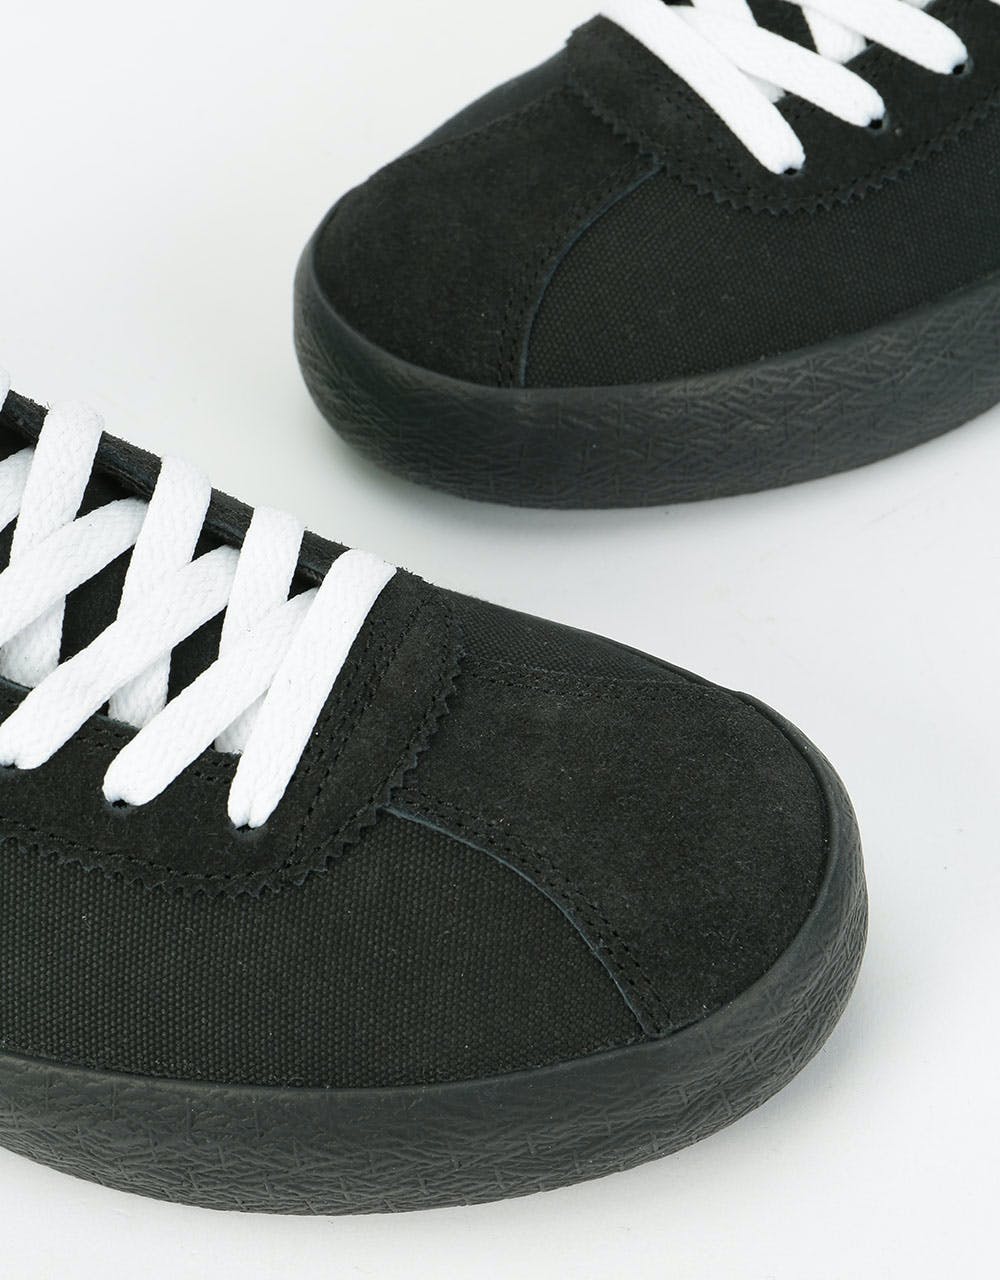 Nike SB x Poets Zoom Bruin QS Skate Shoes - Black/Voltage Green-White